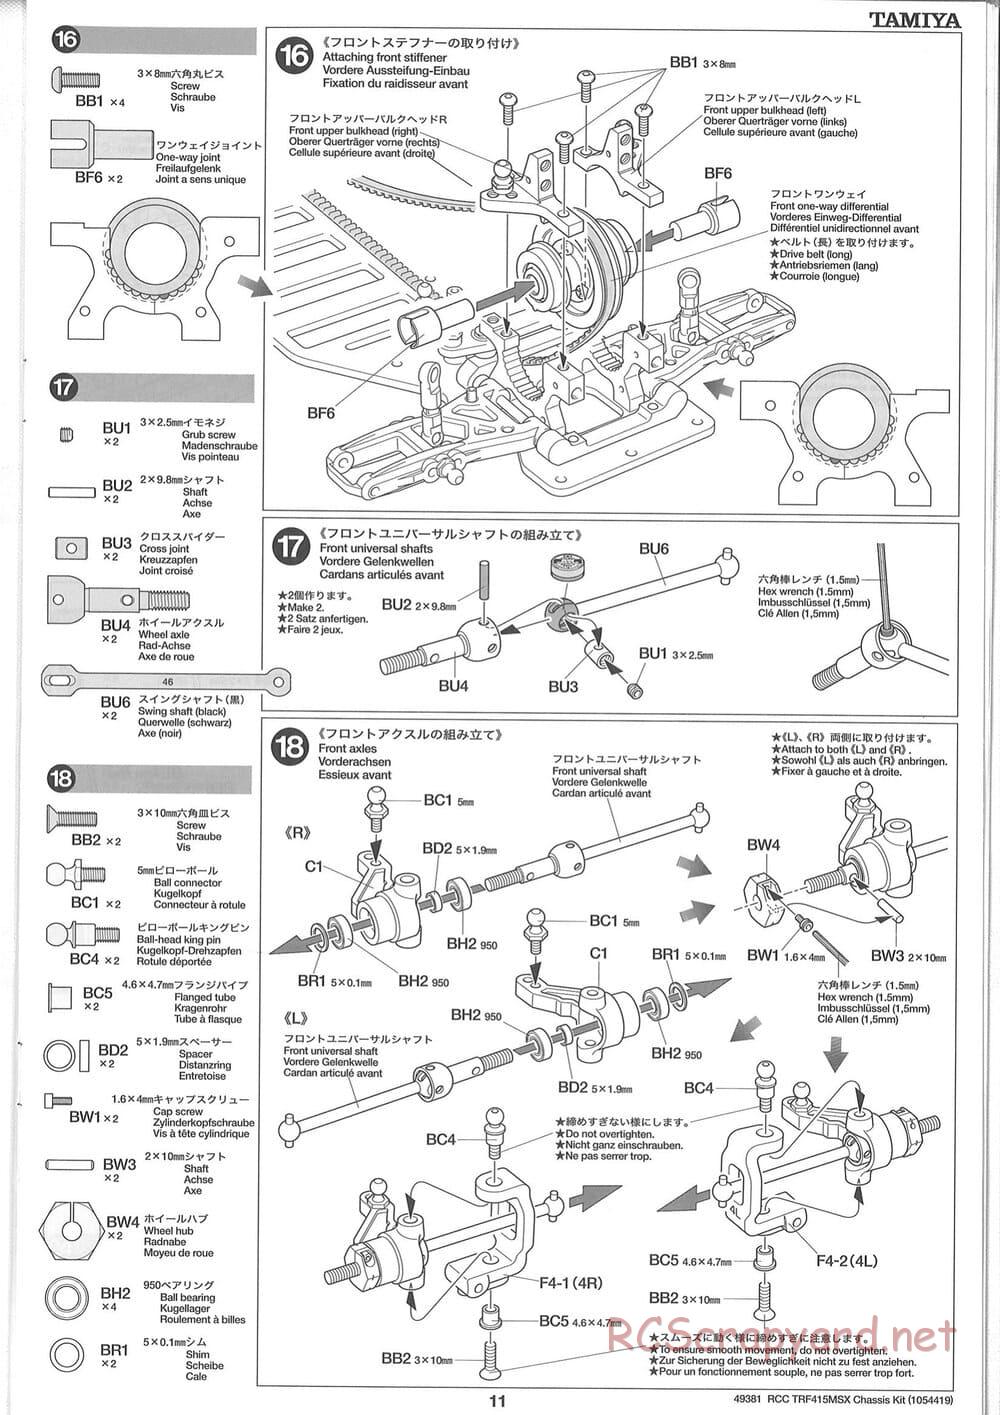 Tamiya - TRF415-MSX Chassis - Manual - Page 11